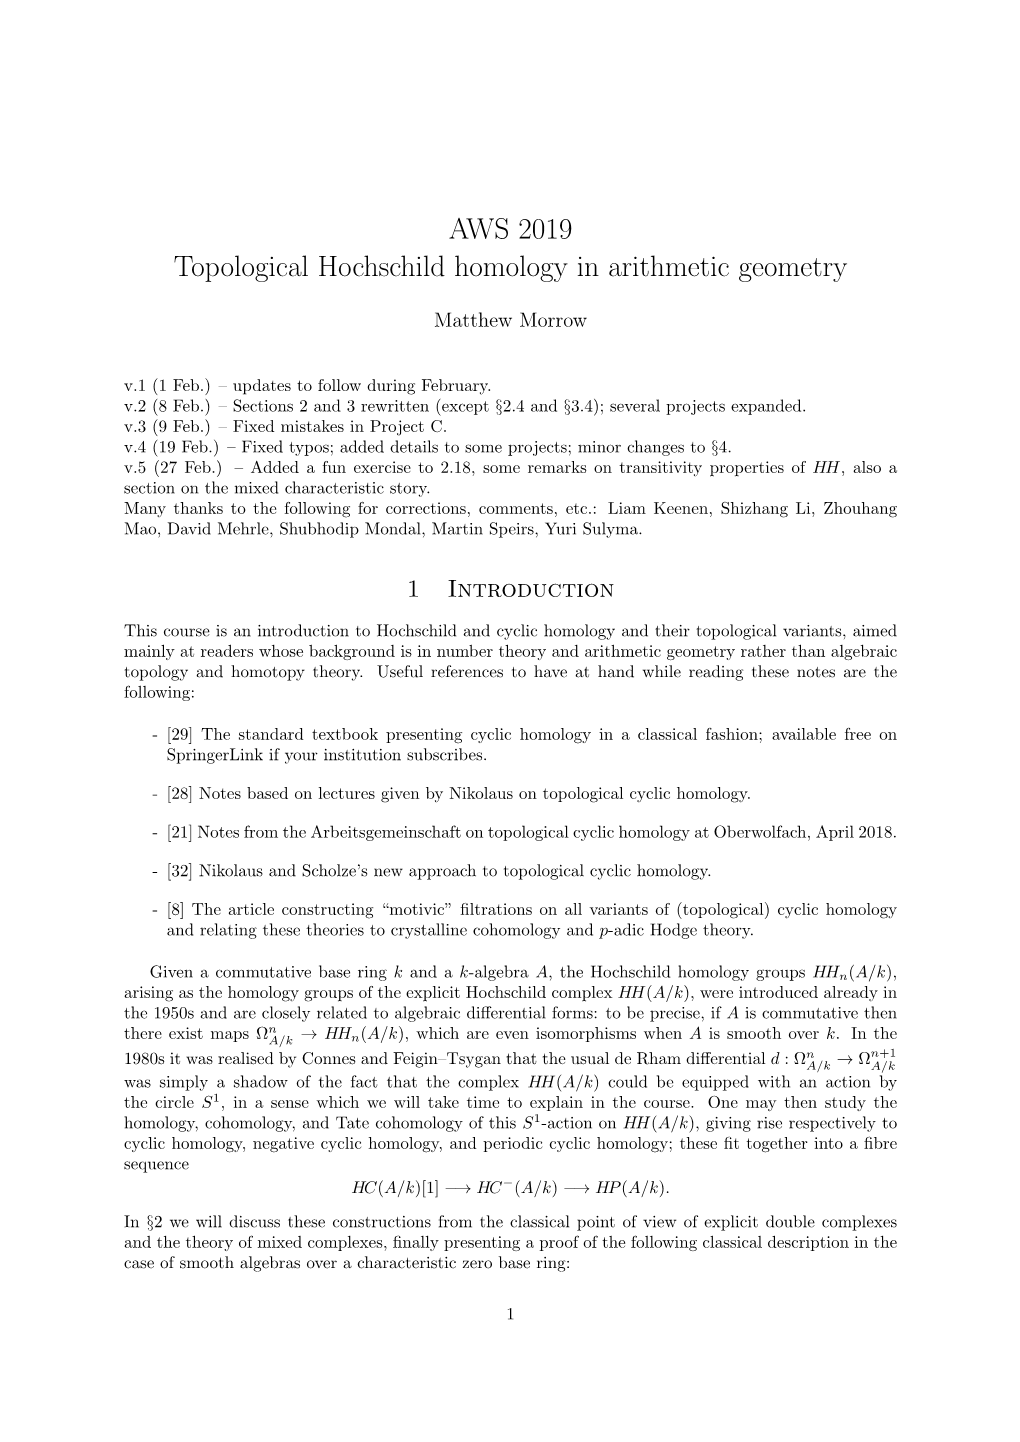 AWS 2019 Topological Hochschild Homology in Arithmetic Geometry